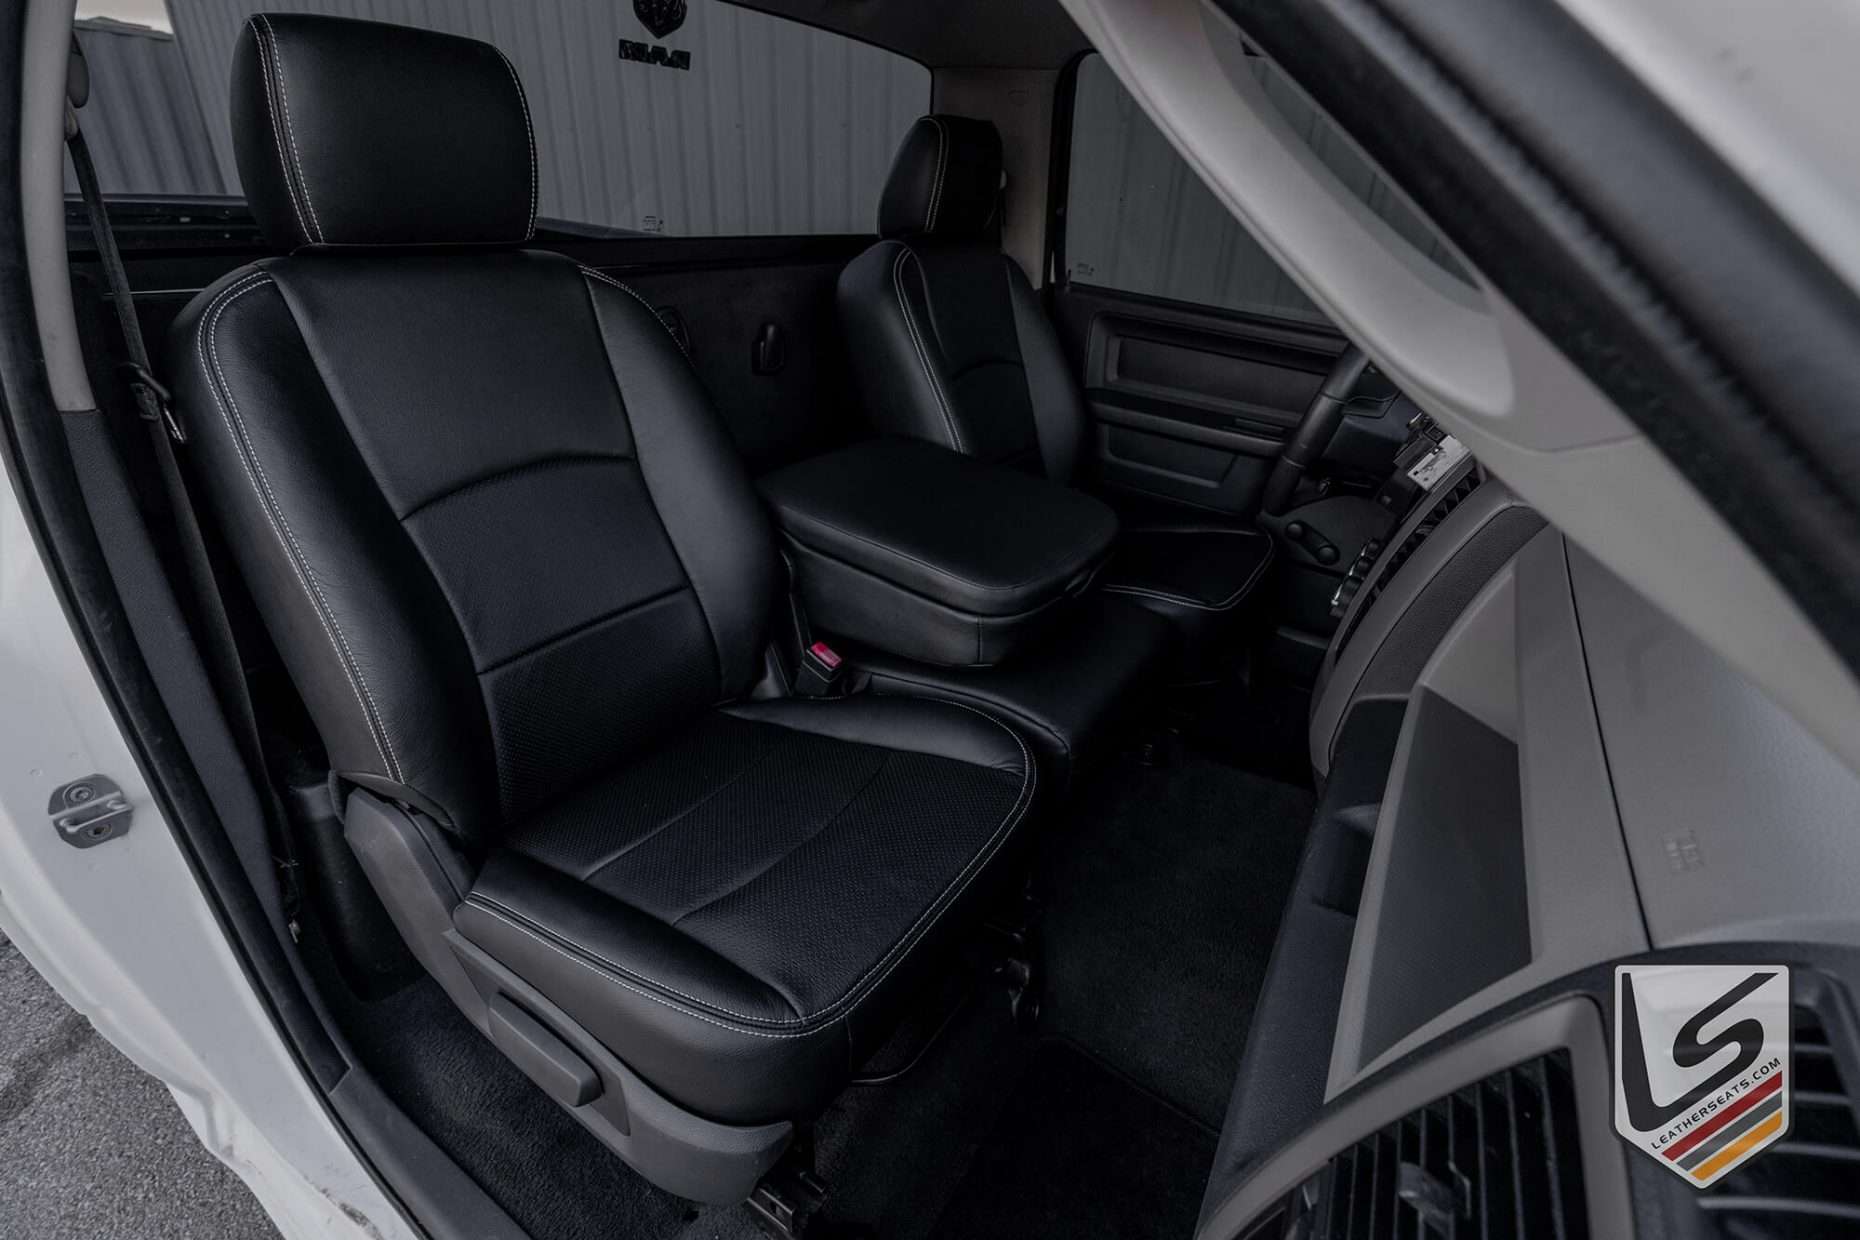 2009-2012 Dodge ram Regular Cab with custom Black leather seats - Passenger seat installed